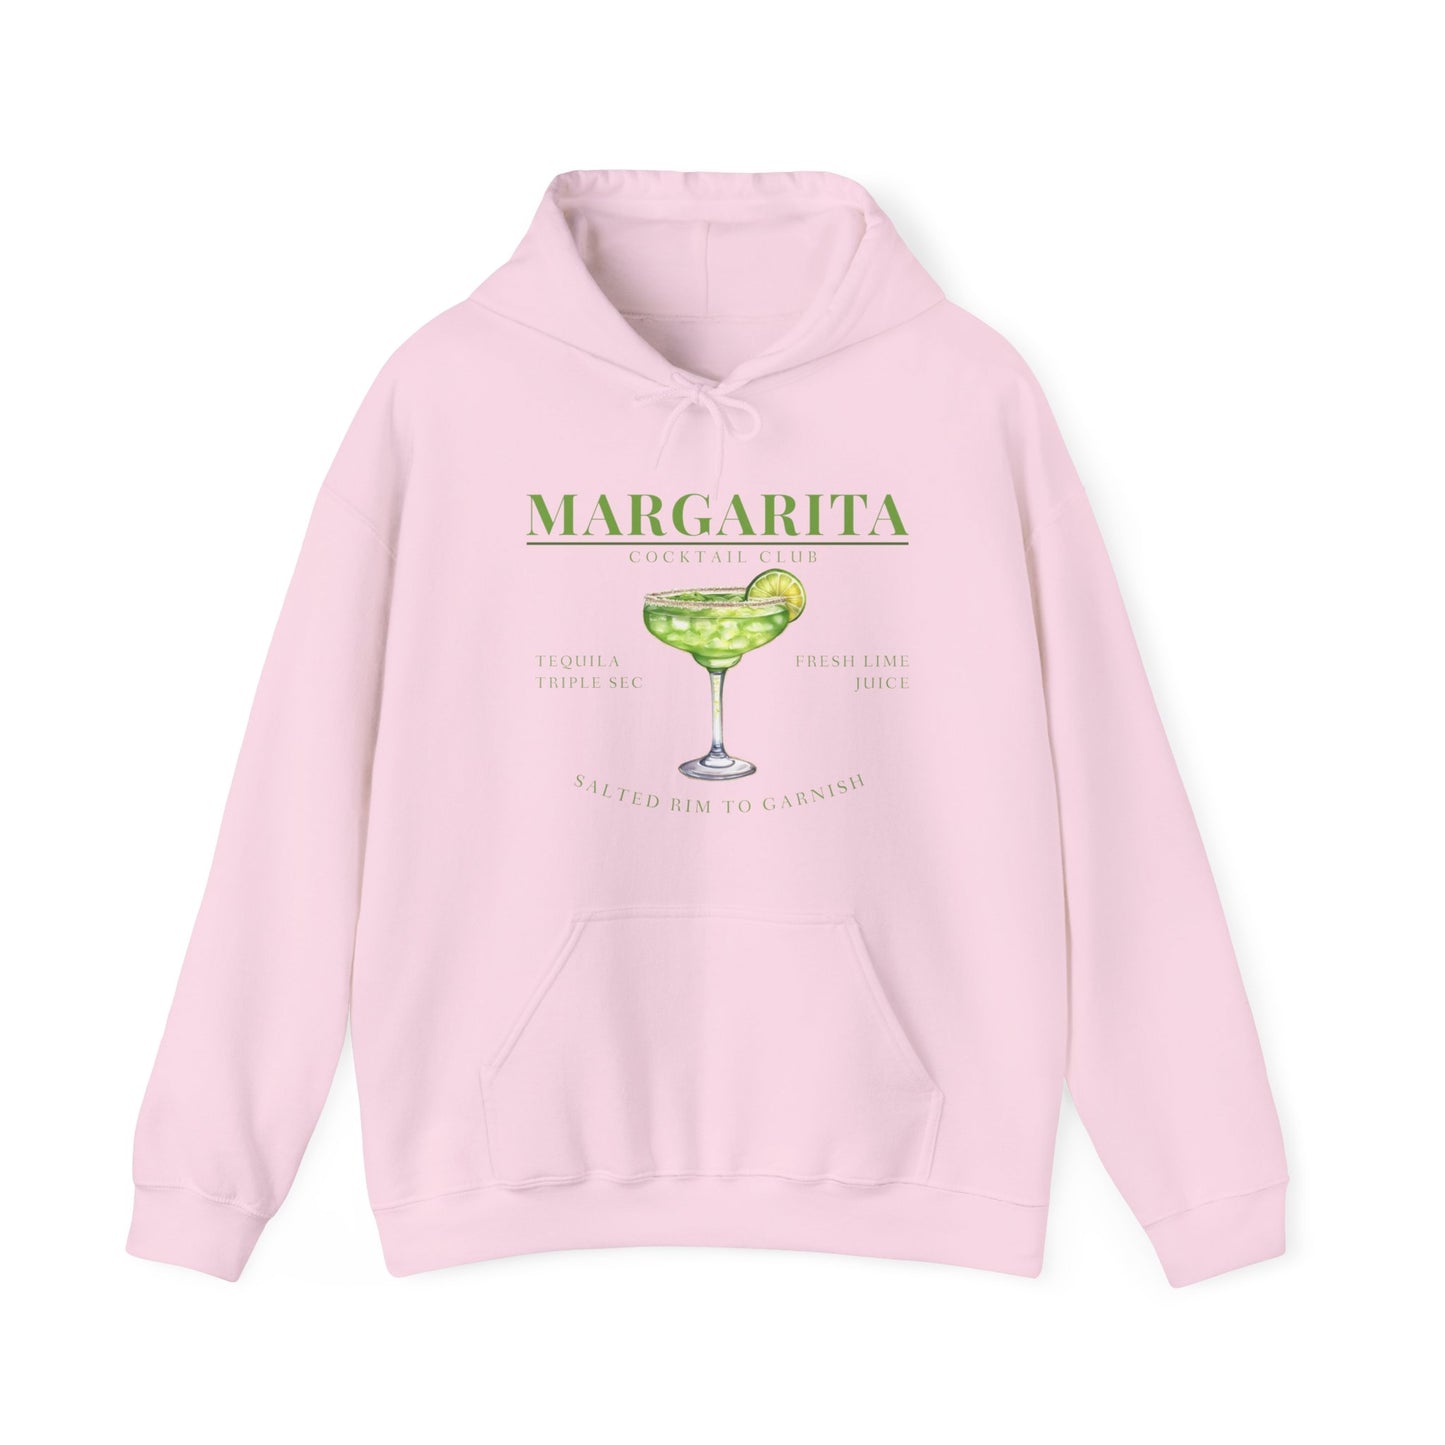 Margarita Cocktail Club Hooded Sweatshirt